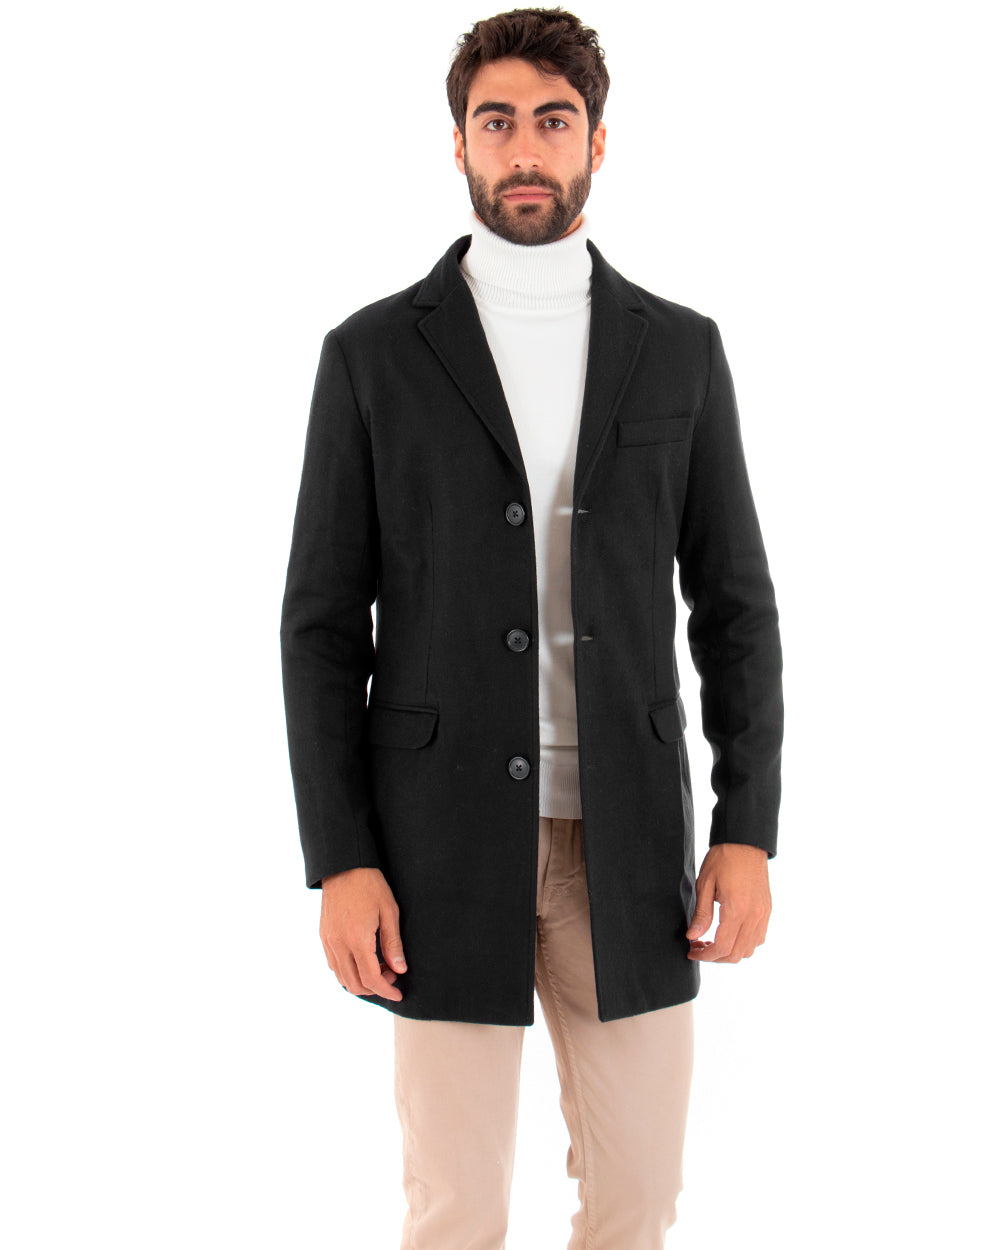 Single-breasted Coat Men's Jacket Reverse Collar Elegant Baronet Pink Solid Color Jacket GIOSAL-G2682A